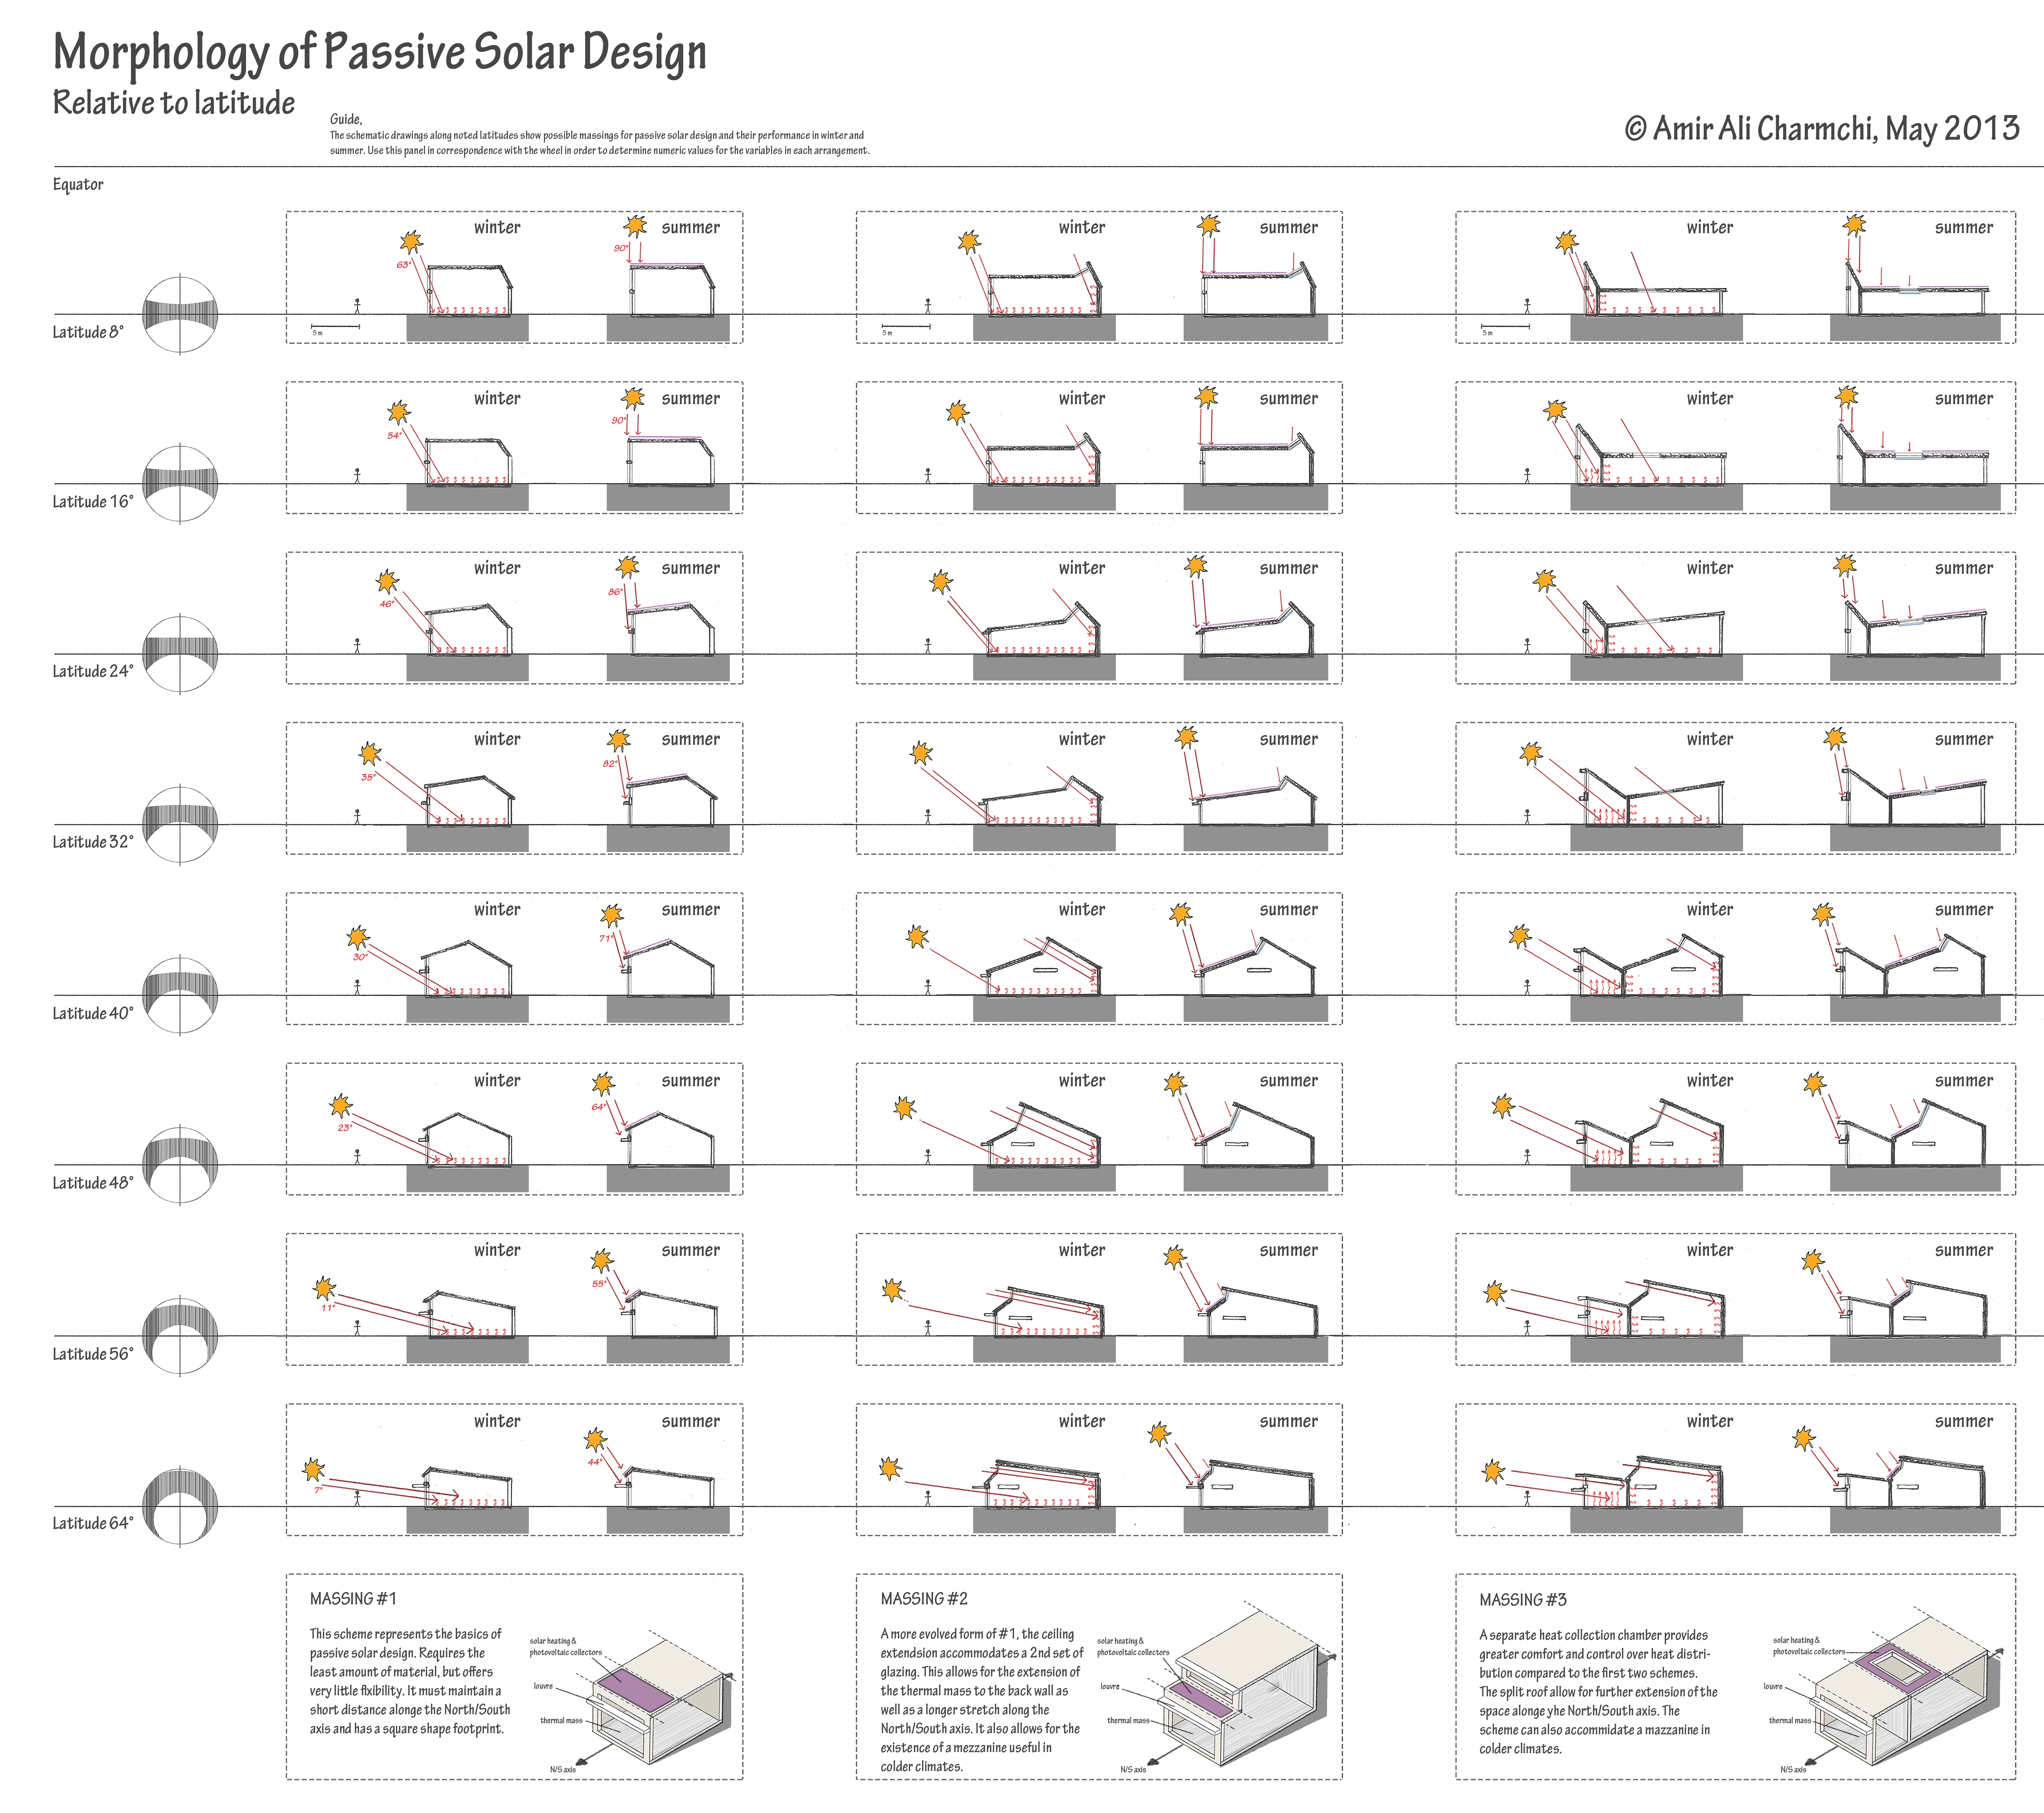 https://designincubatorblog.files.wordpress.com/2013/05/morphology_of_passive_solar_design.jpg